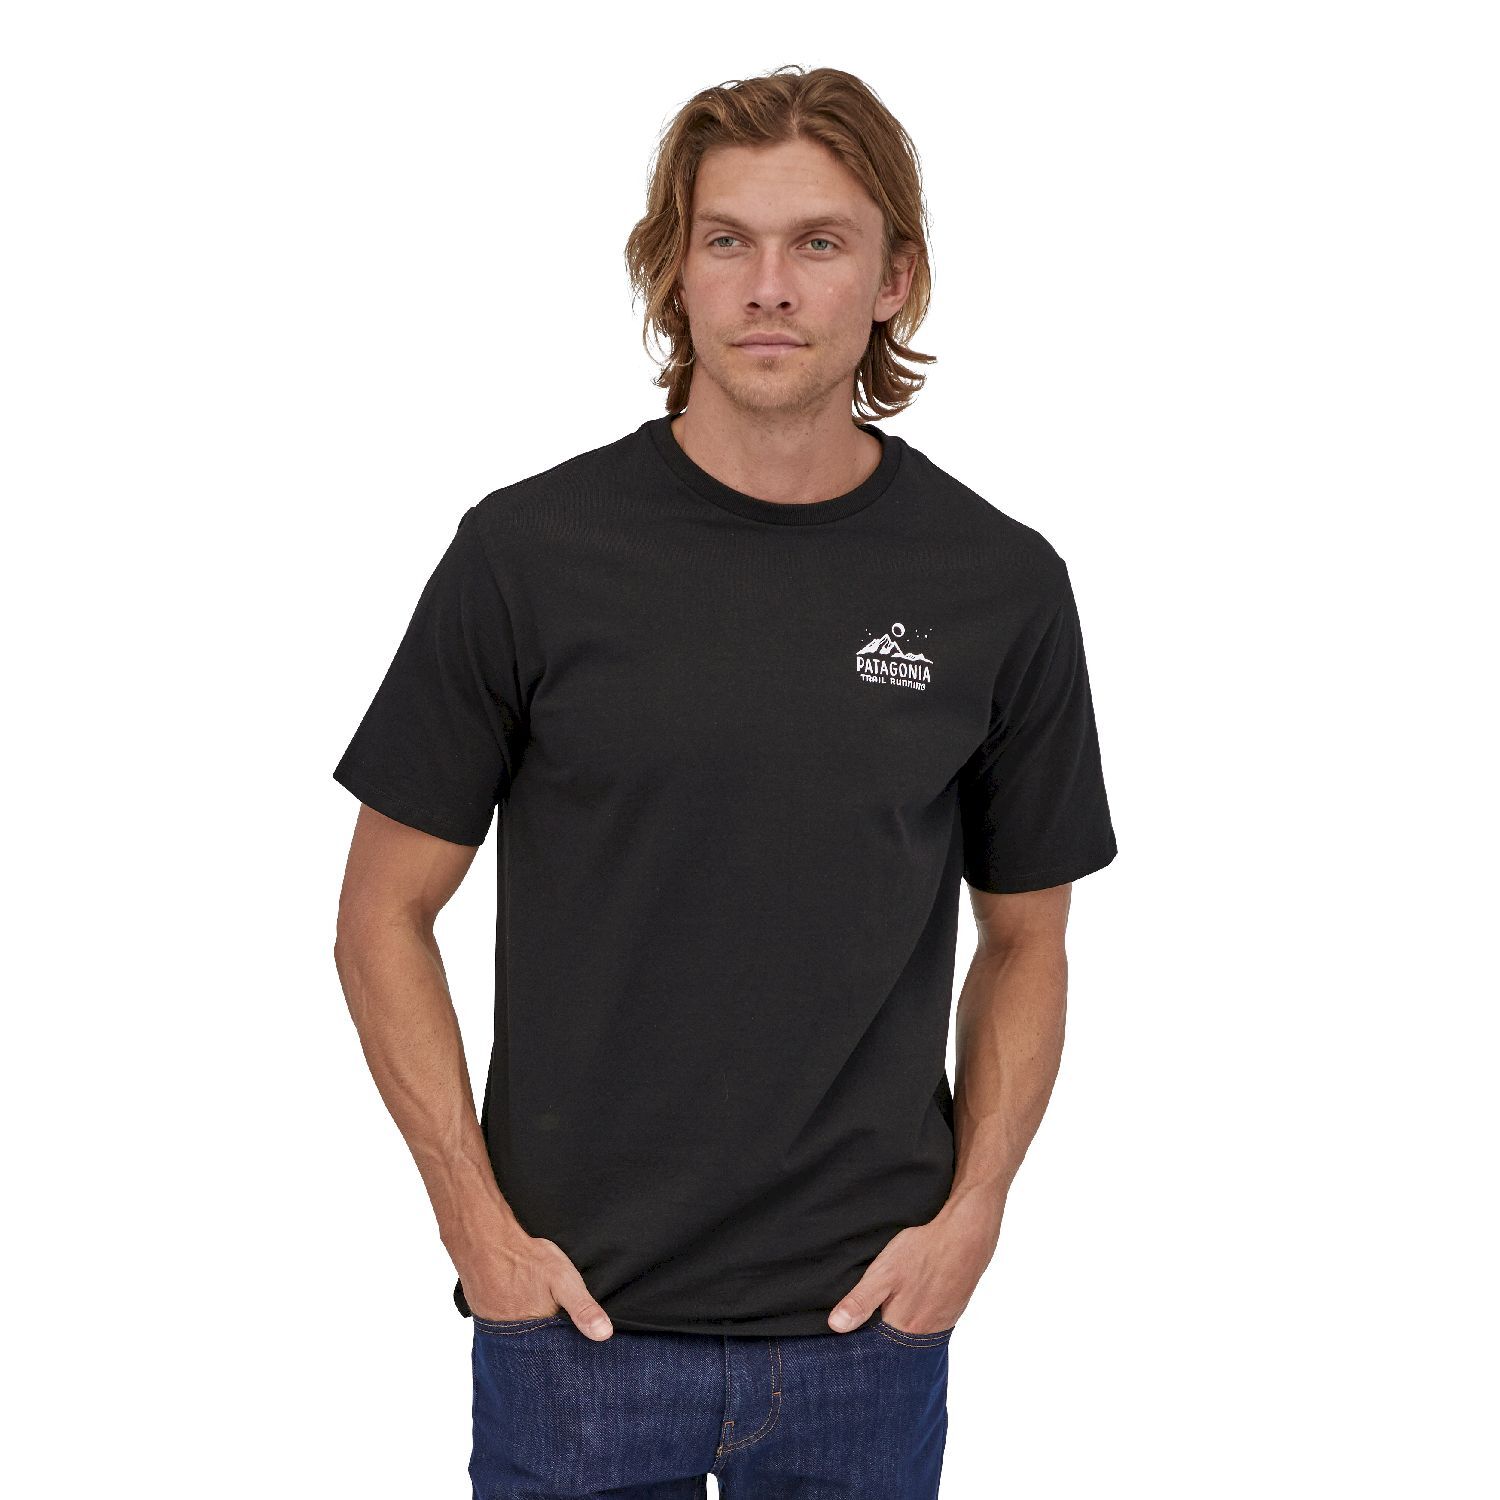 Patagonia Ridgeline Runner Responsibili-Tee - T-shirt - Uomo